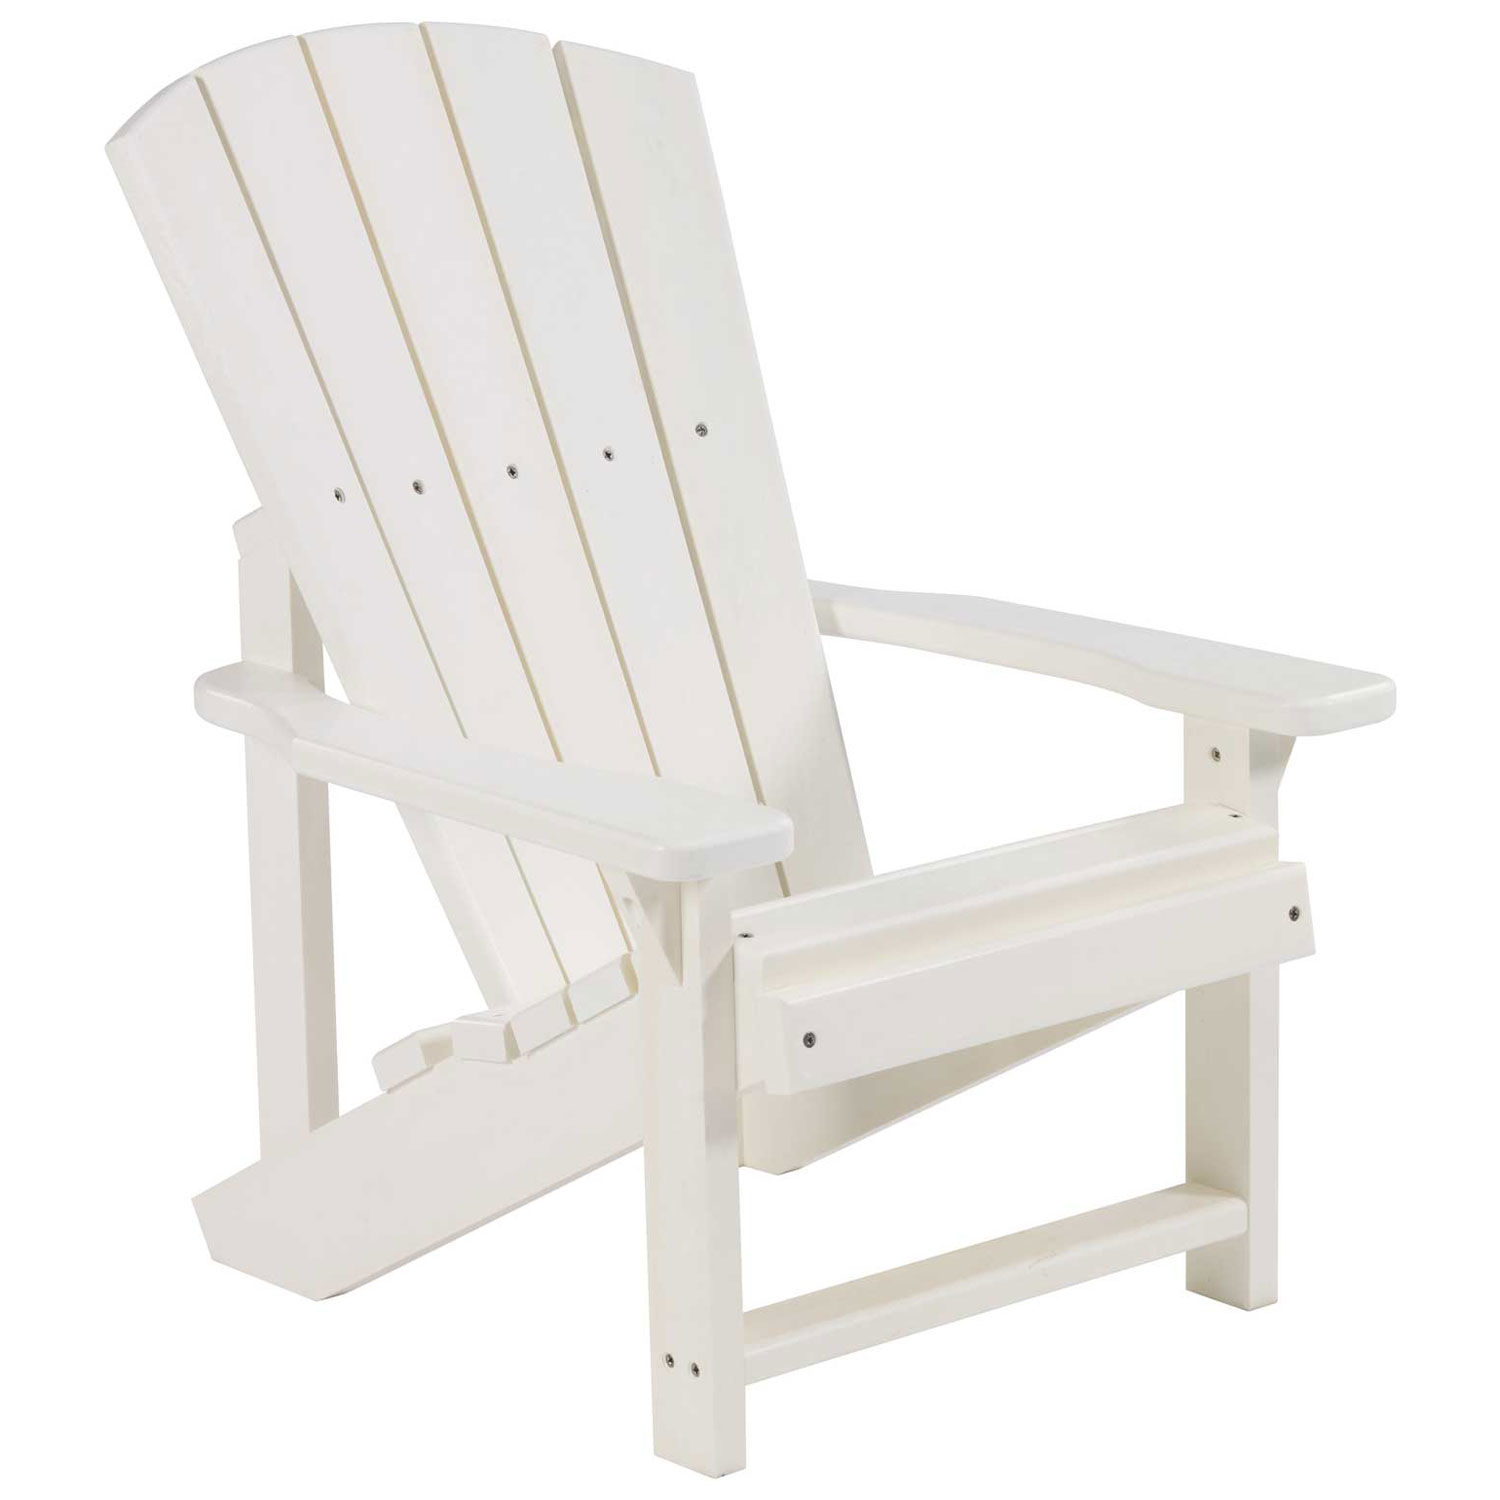 Recycled Plastic Kids Adirondack Chair, White, 24"L x 20"W x 27"H, Lot